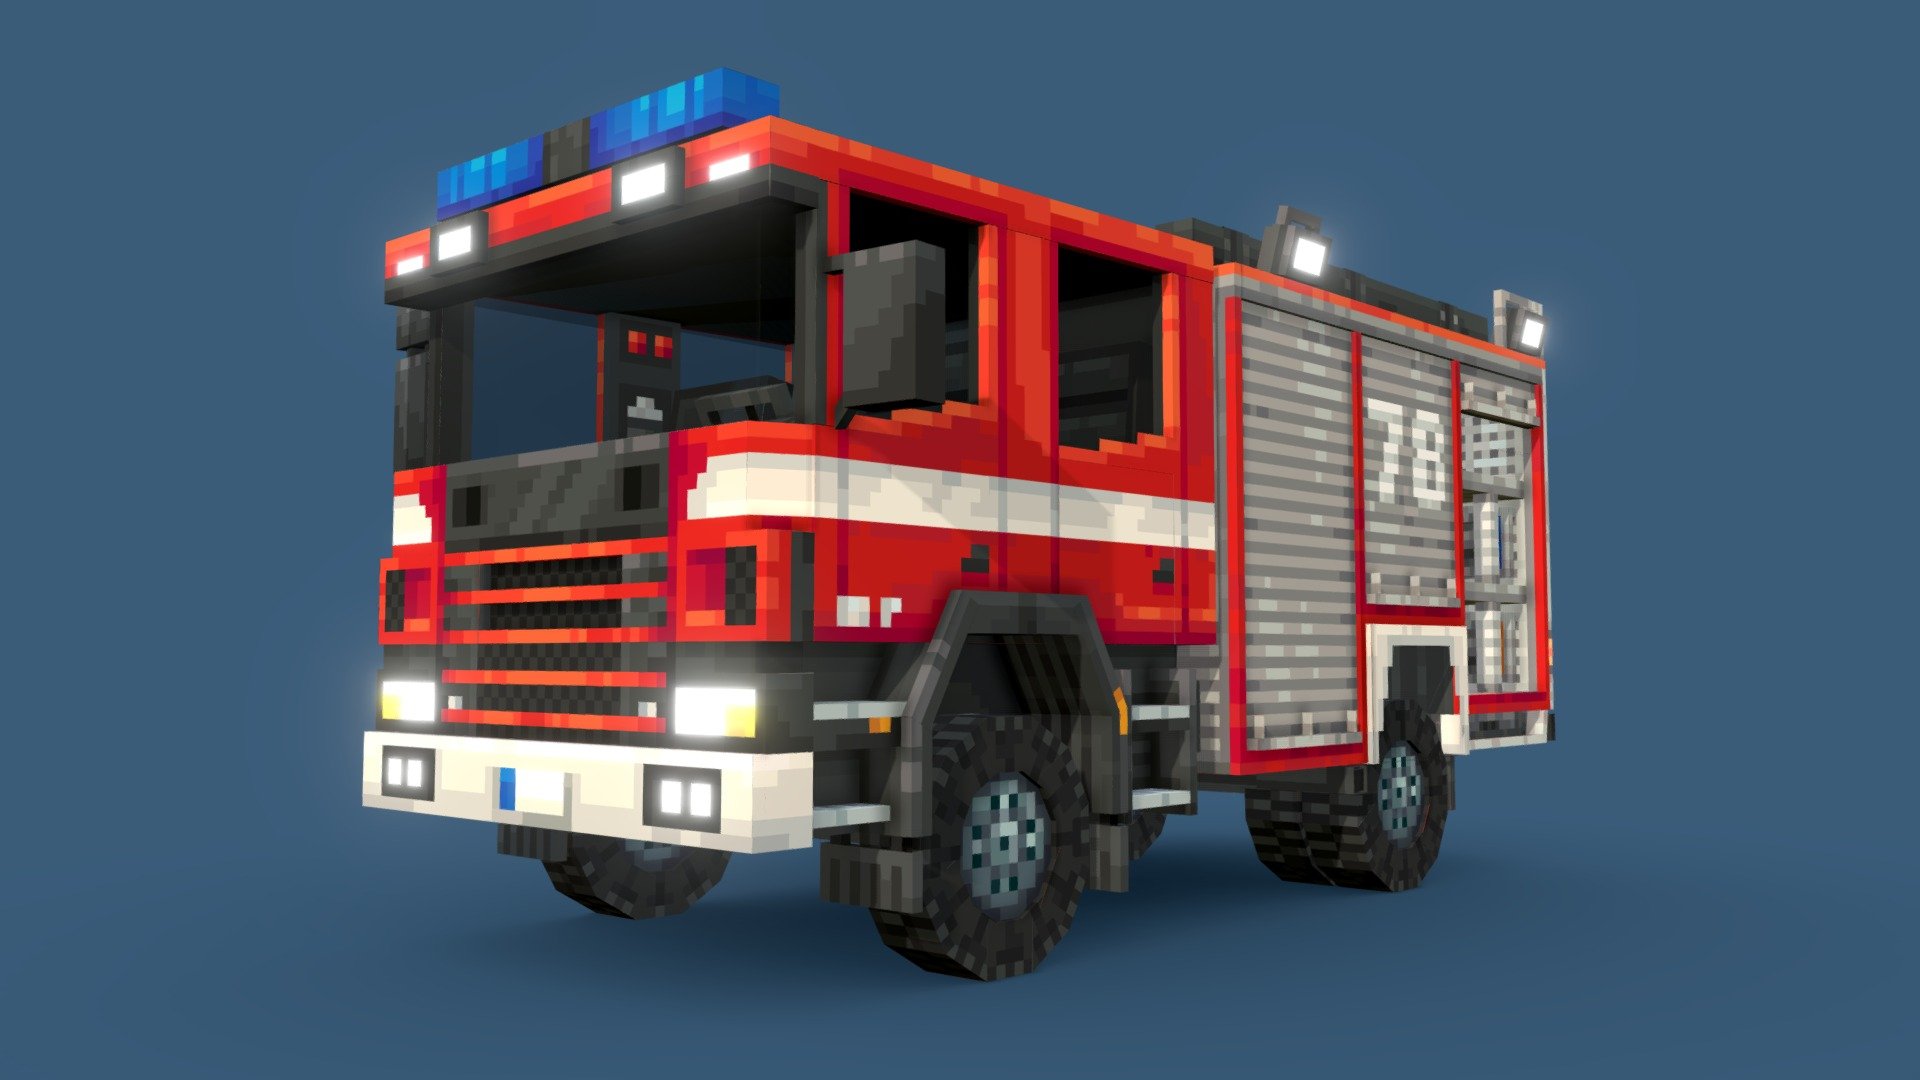 Made for blockbench splash art contest

Render:

 - Scania Fire Truck - 3D model by Wacky (@wackyblocks) 3d model